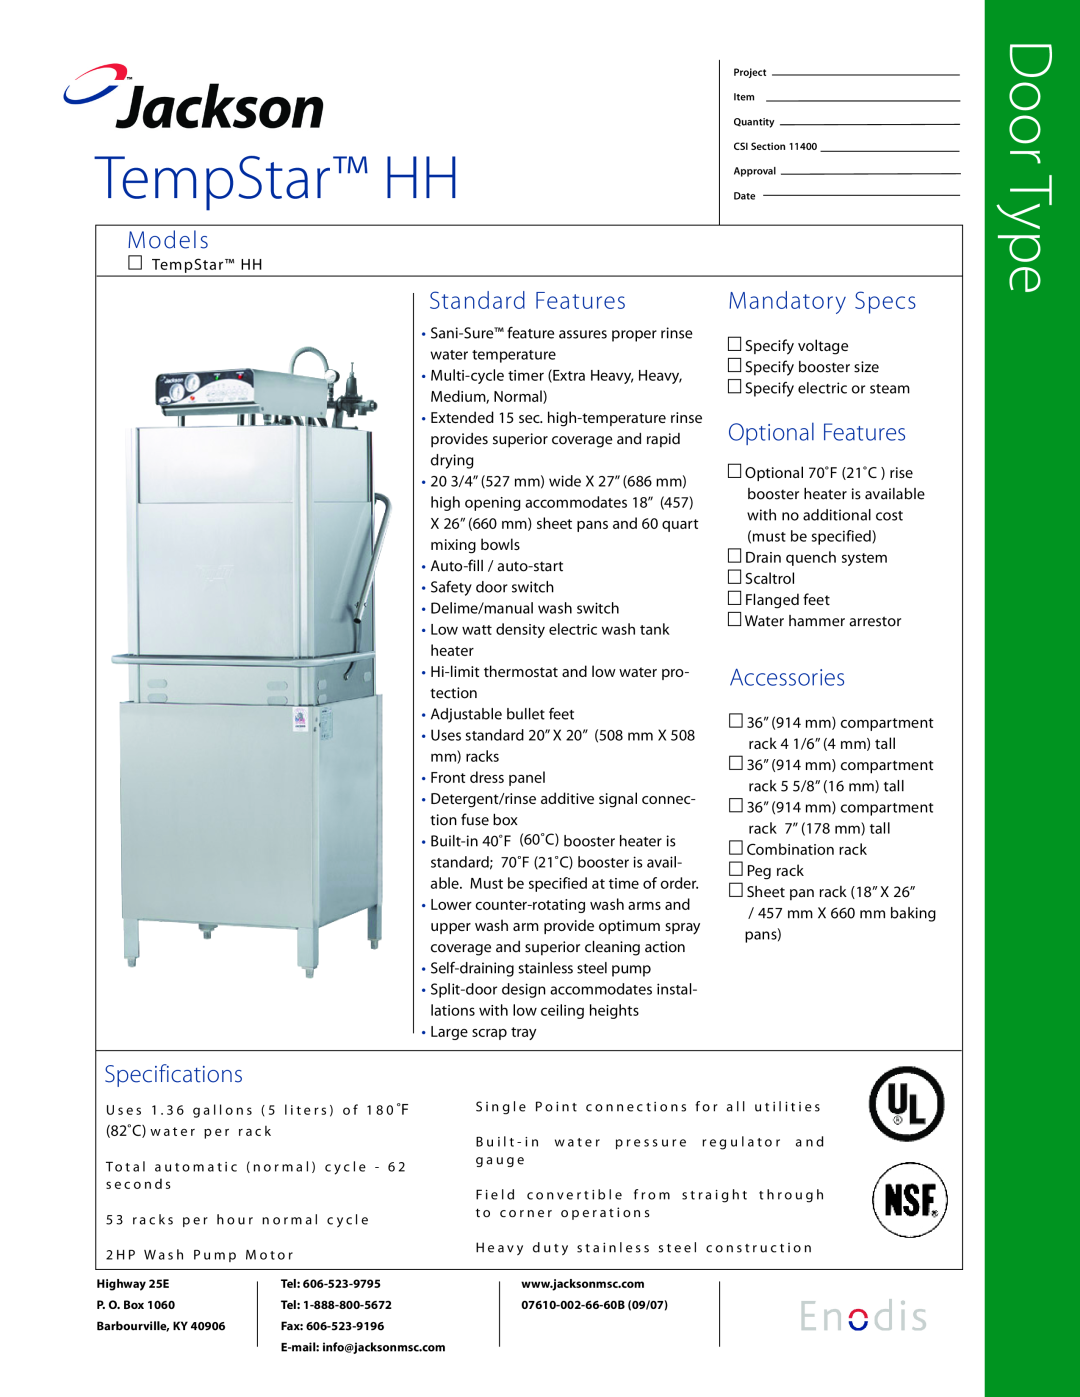 Jackson TempStar HH specifications Door Type, Models, Standard Features, Mandatory Specs, Optional Features, Accessories 